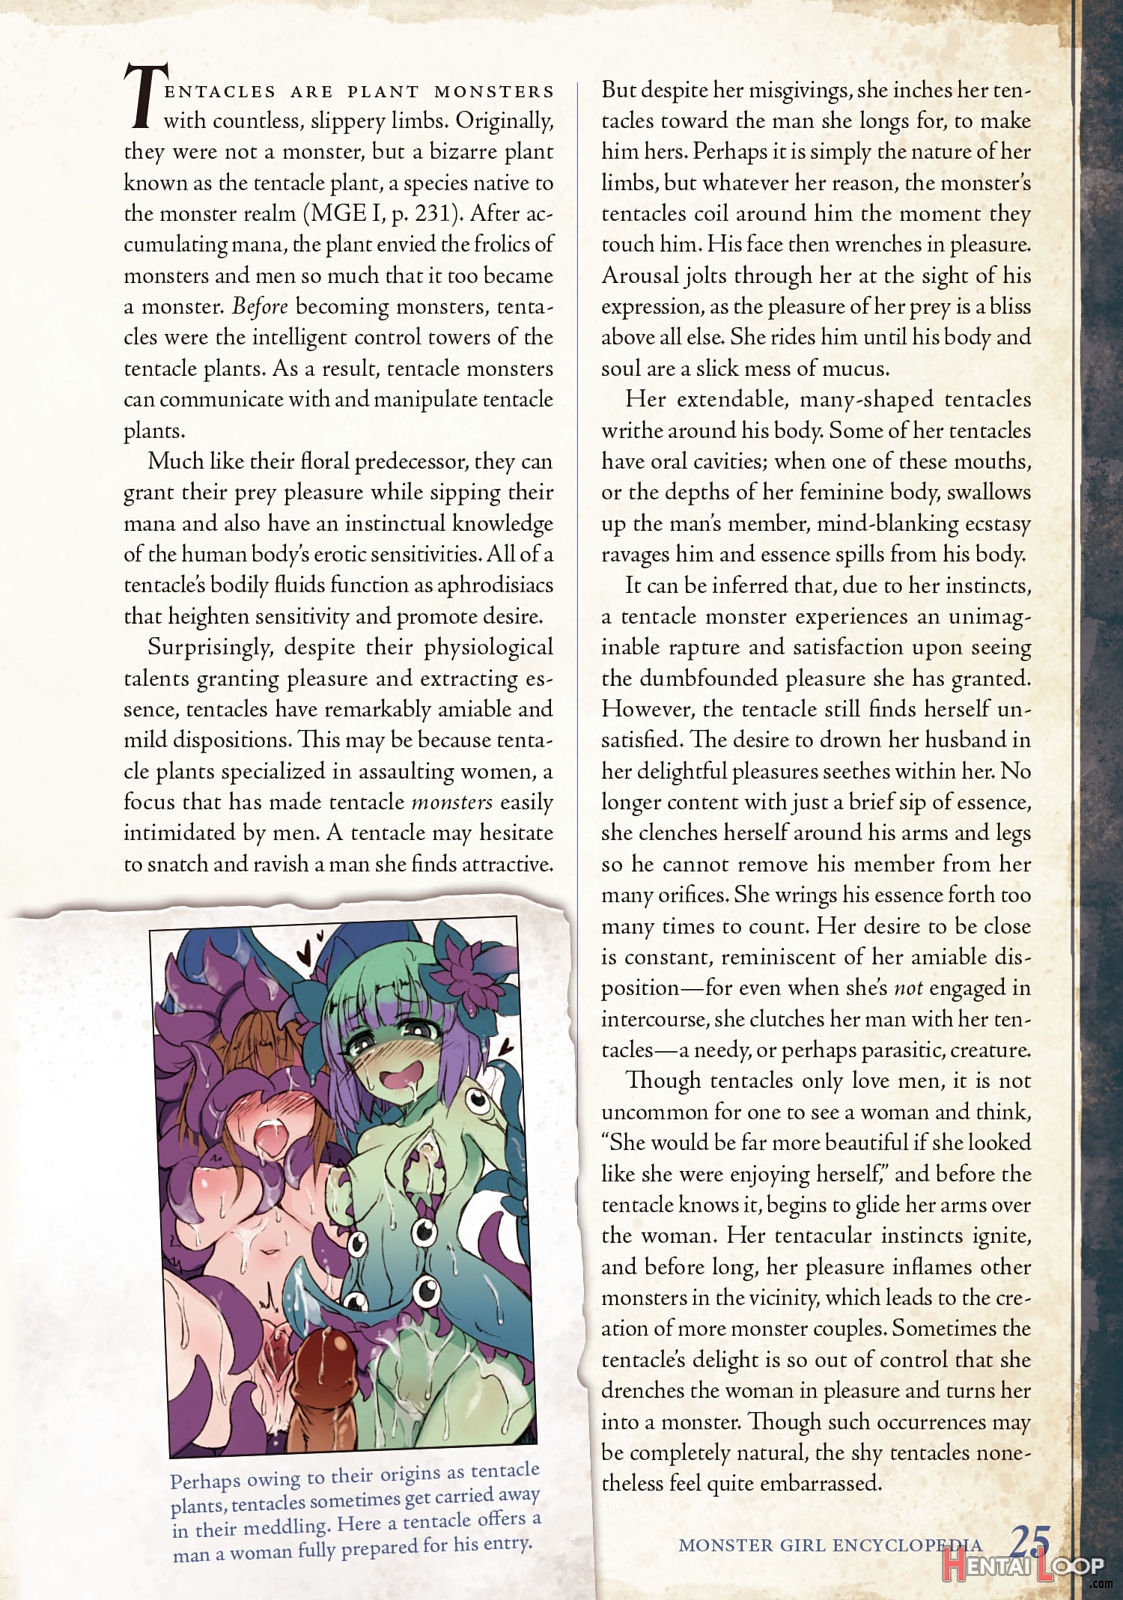 Monster Girl Encyclopedia Vol. 2 page 26